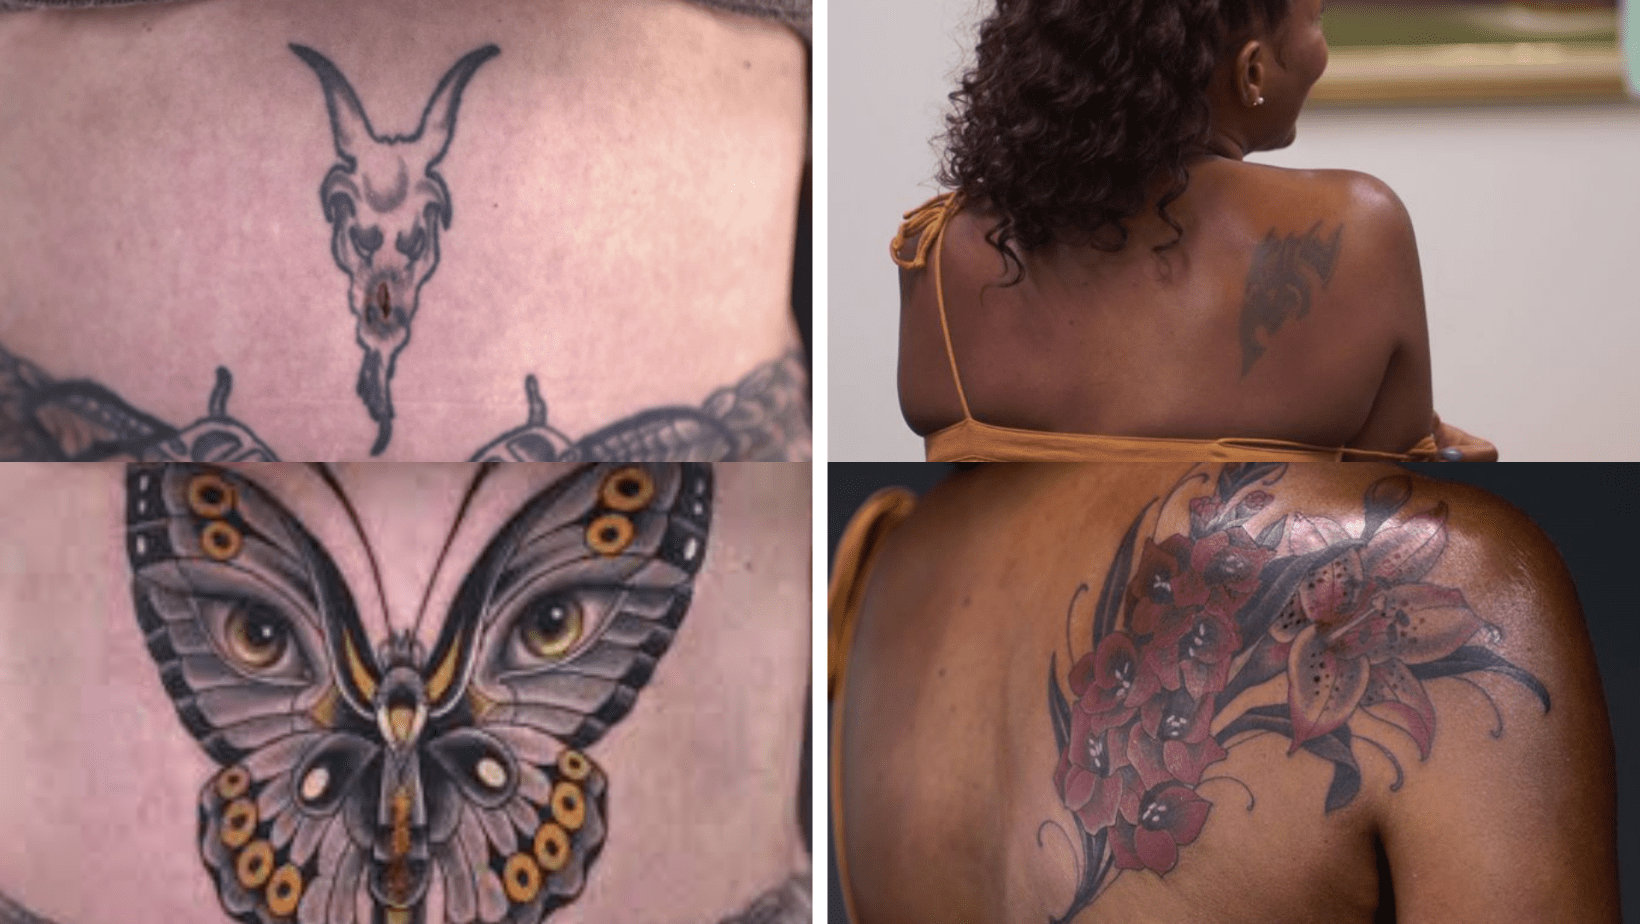 Tattoo Redo: Netflix's Tattoo Cover Up Show